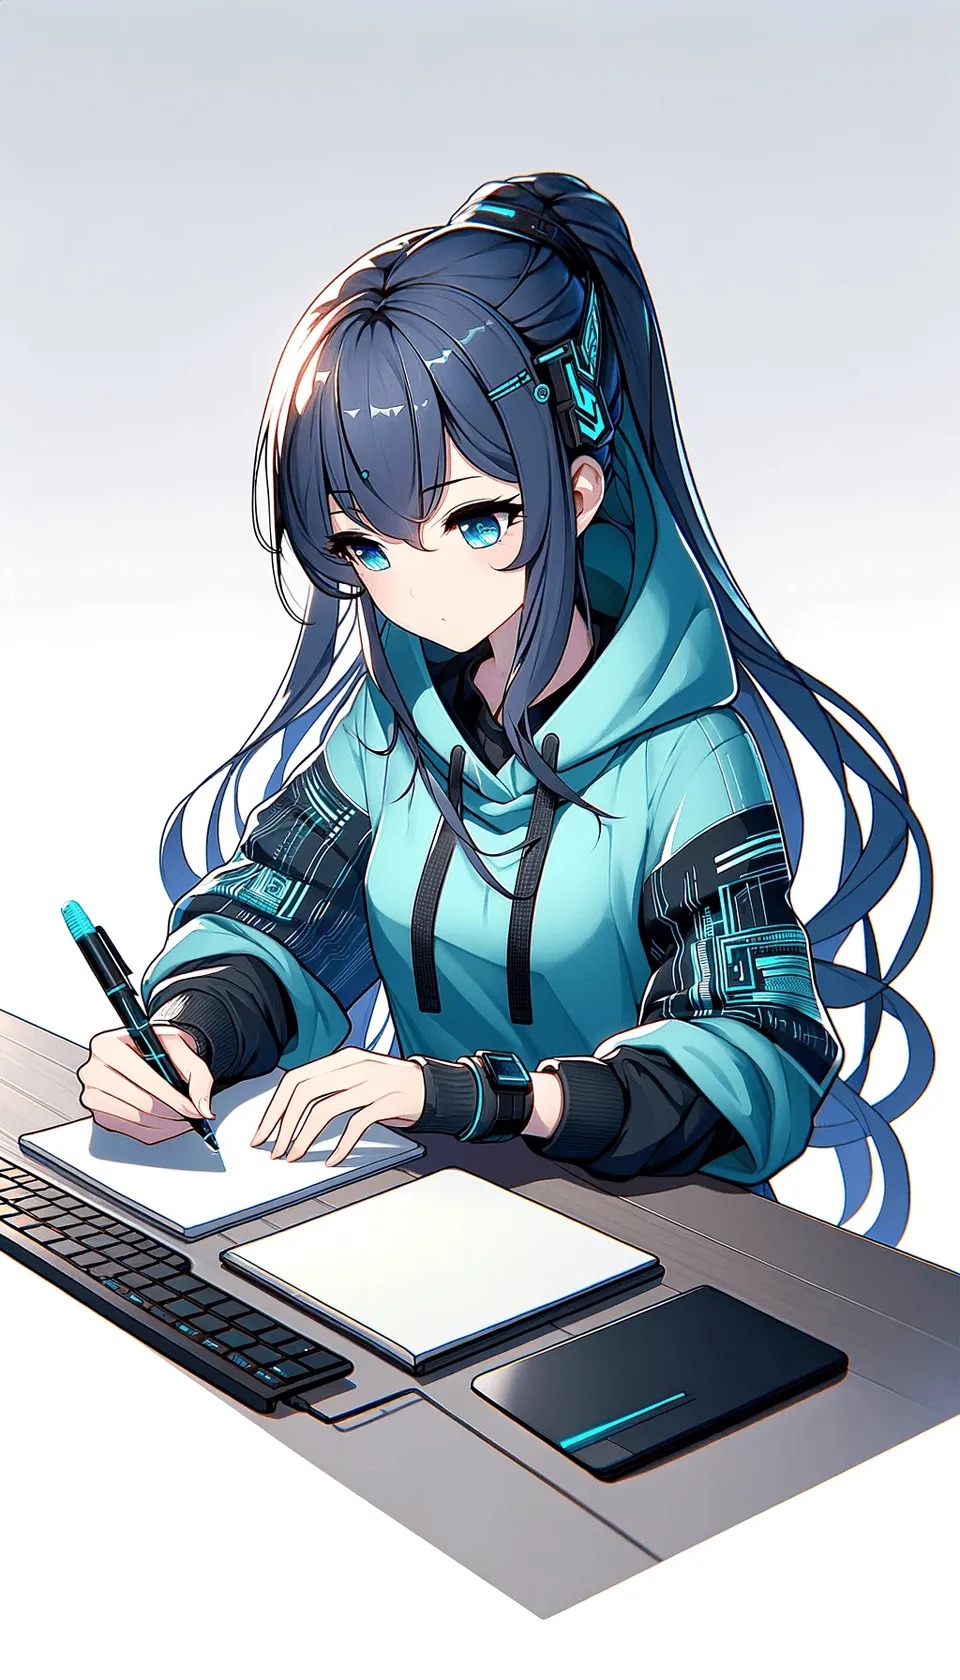 GPT writing something on the desk